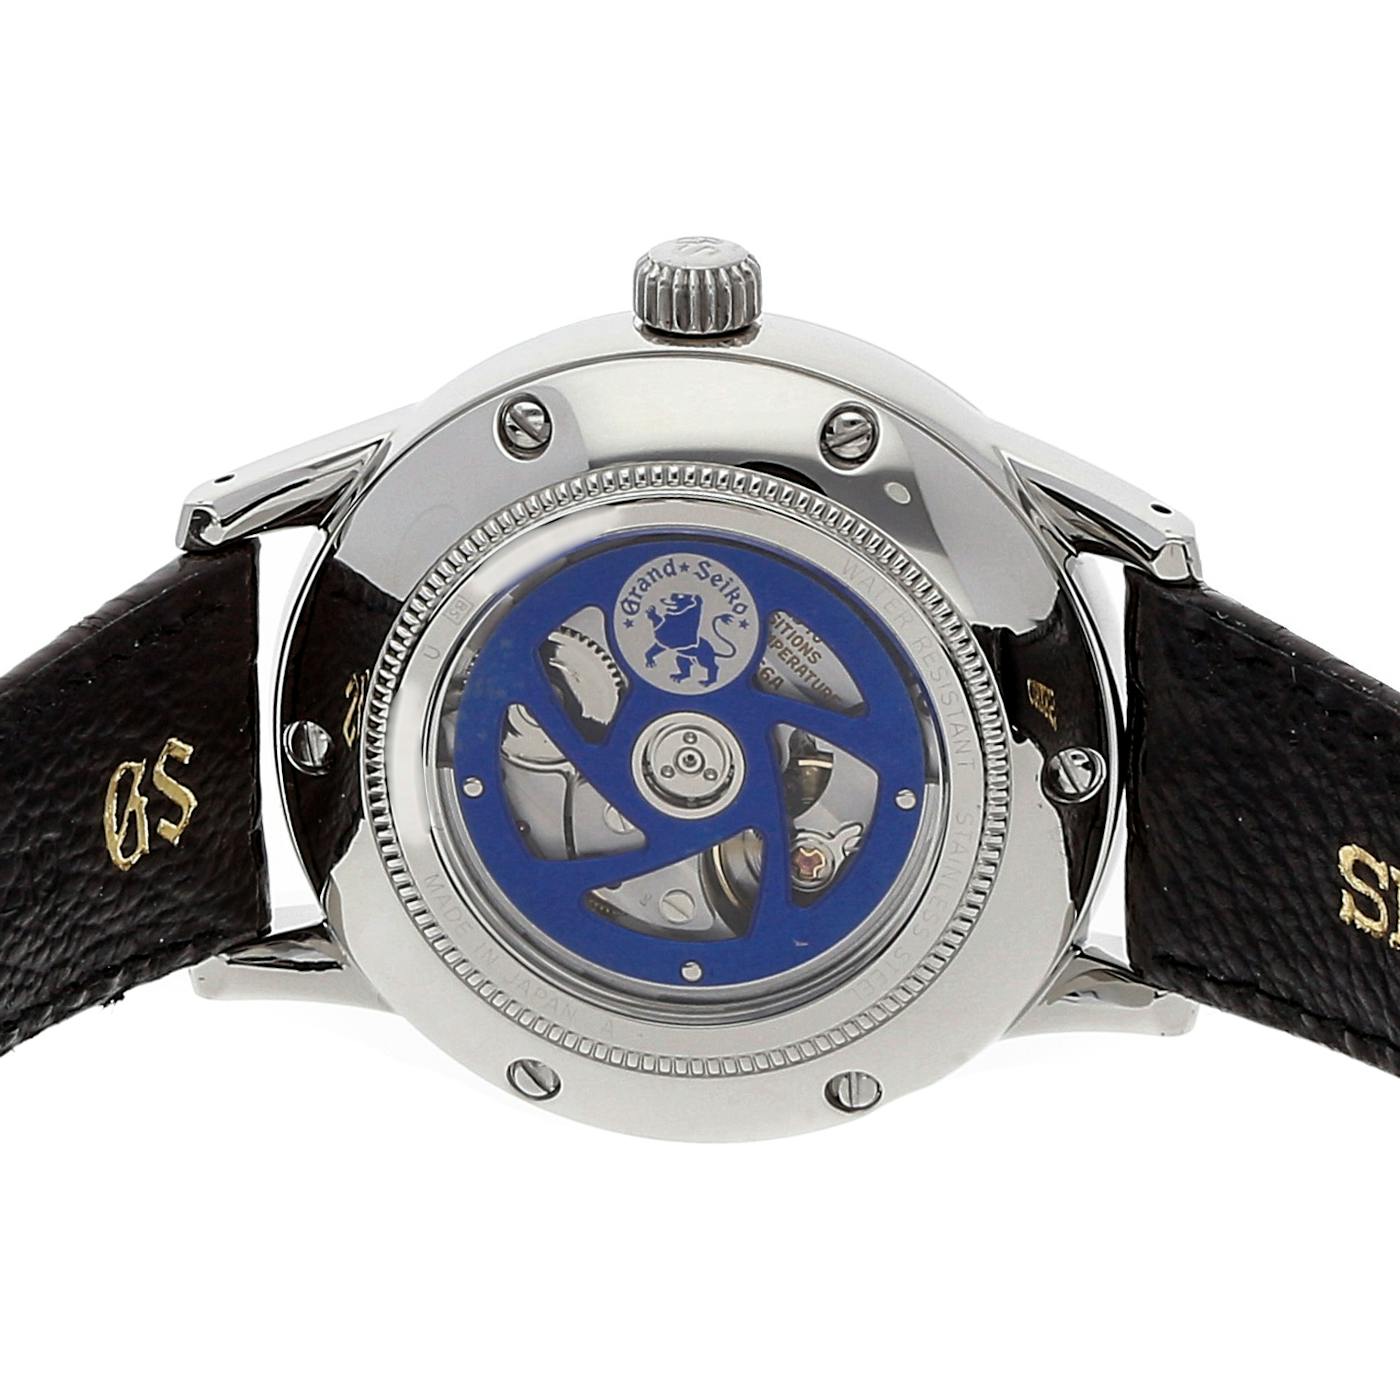 Seiko Grand Seiko GMT Limited Edition SBGM031 | WatchBox